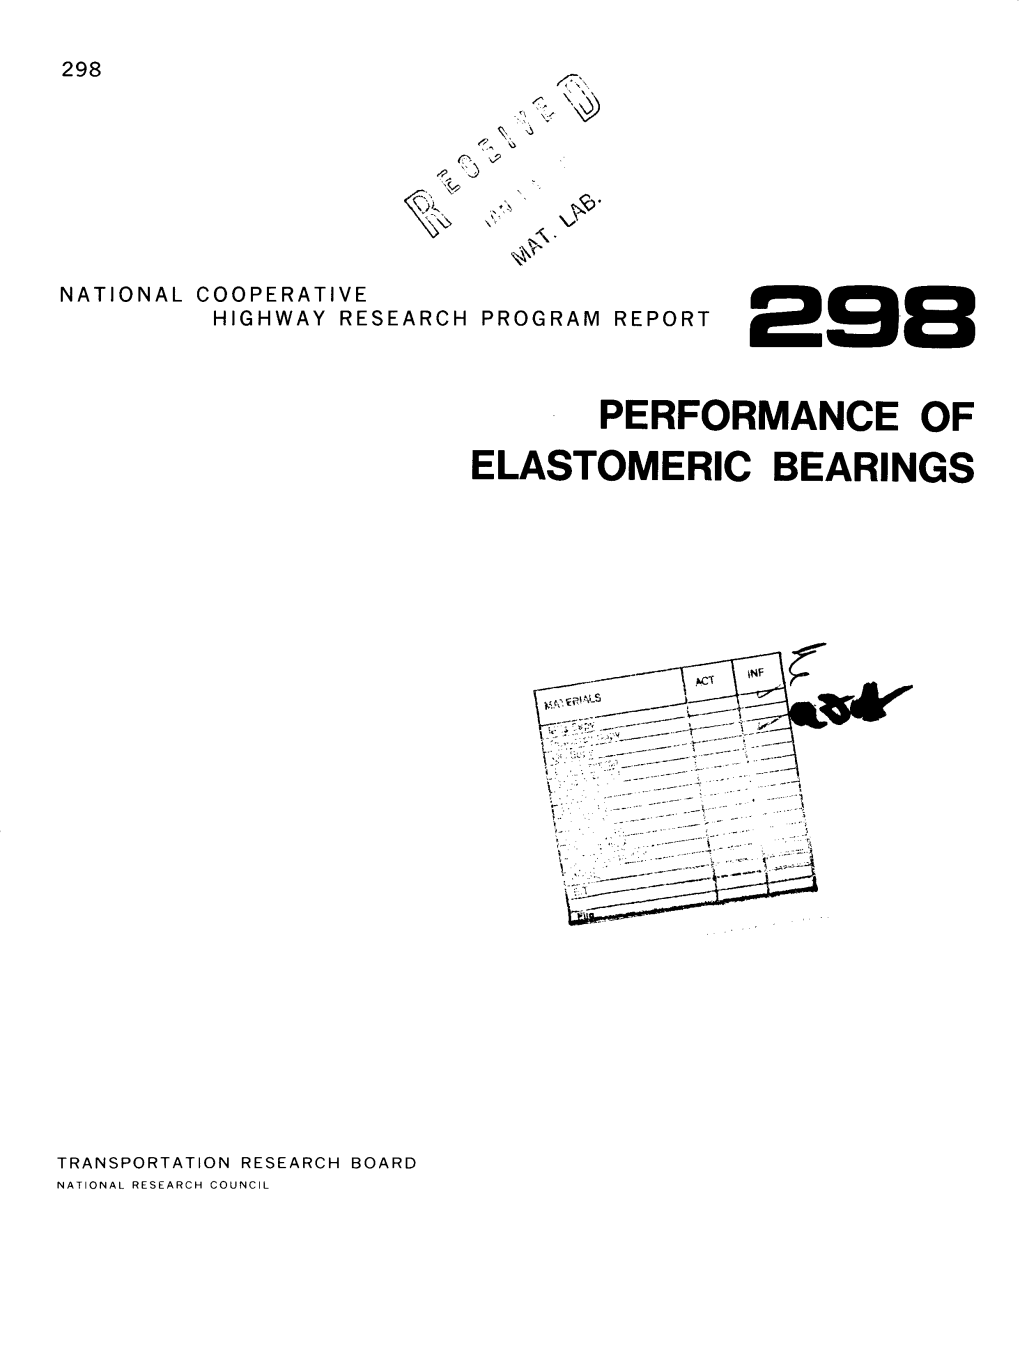 Performance of Elastomeric Bearings